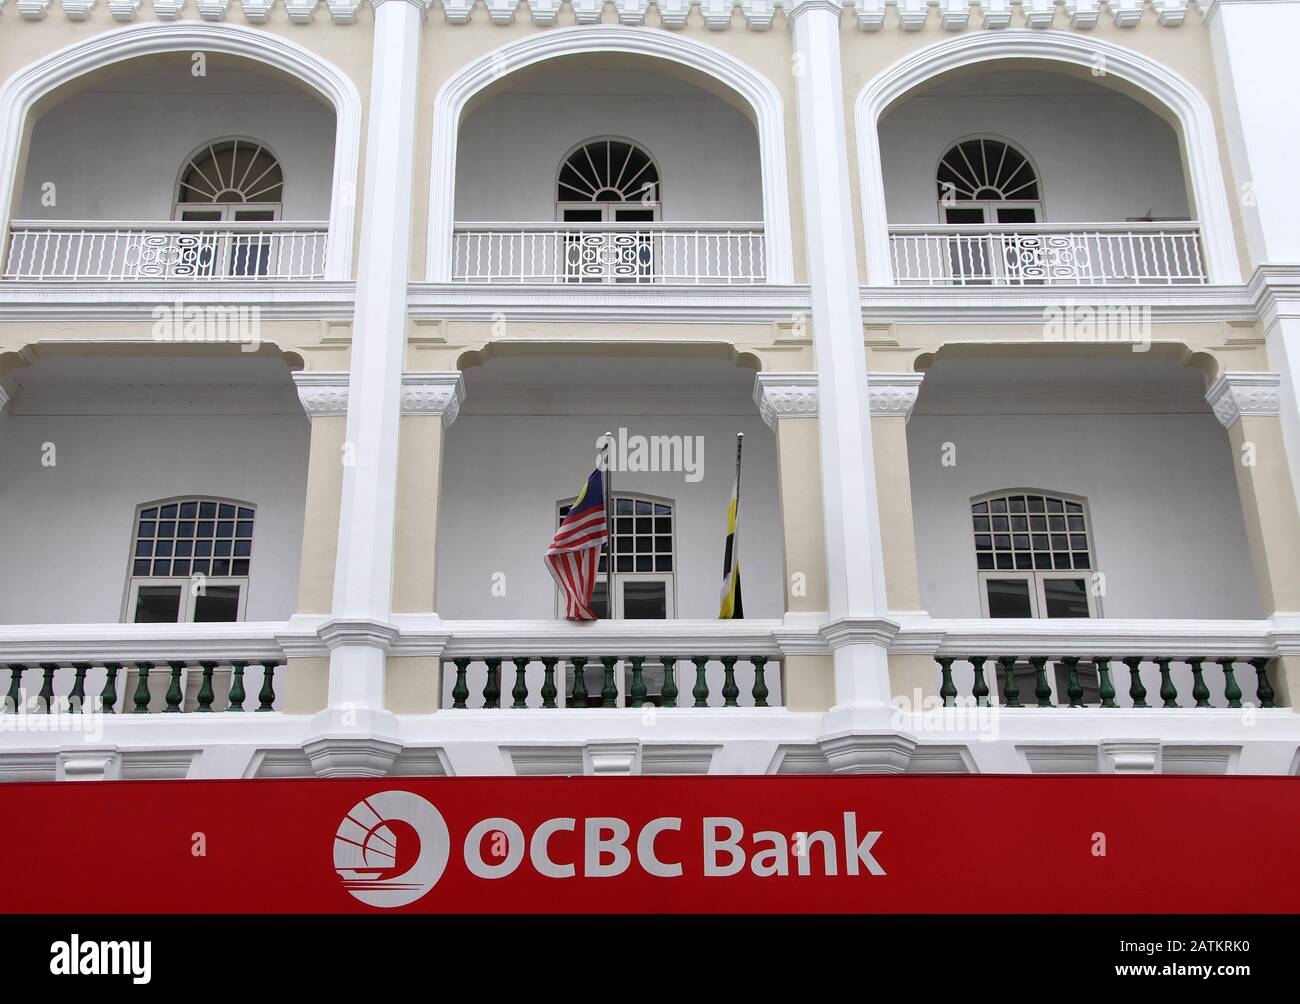 OCBC Bank at Ipoh in Malaysia Stock Photo